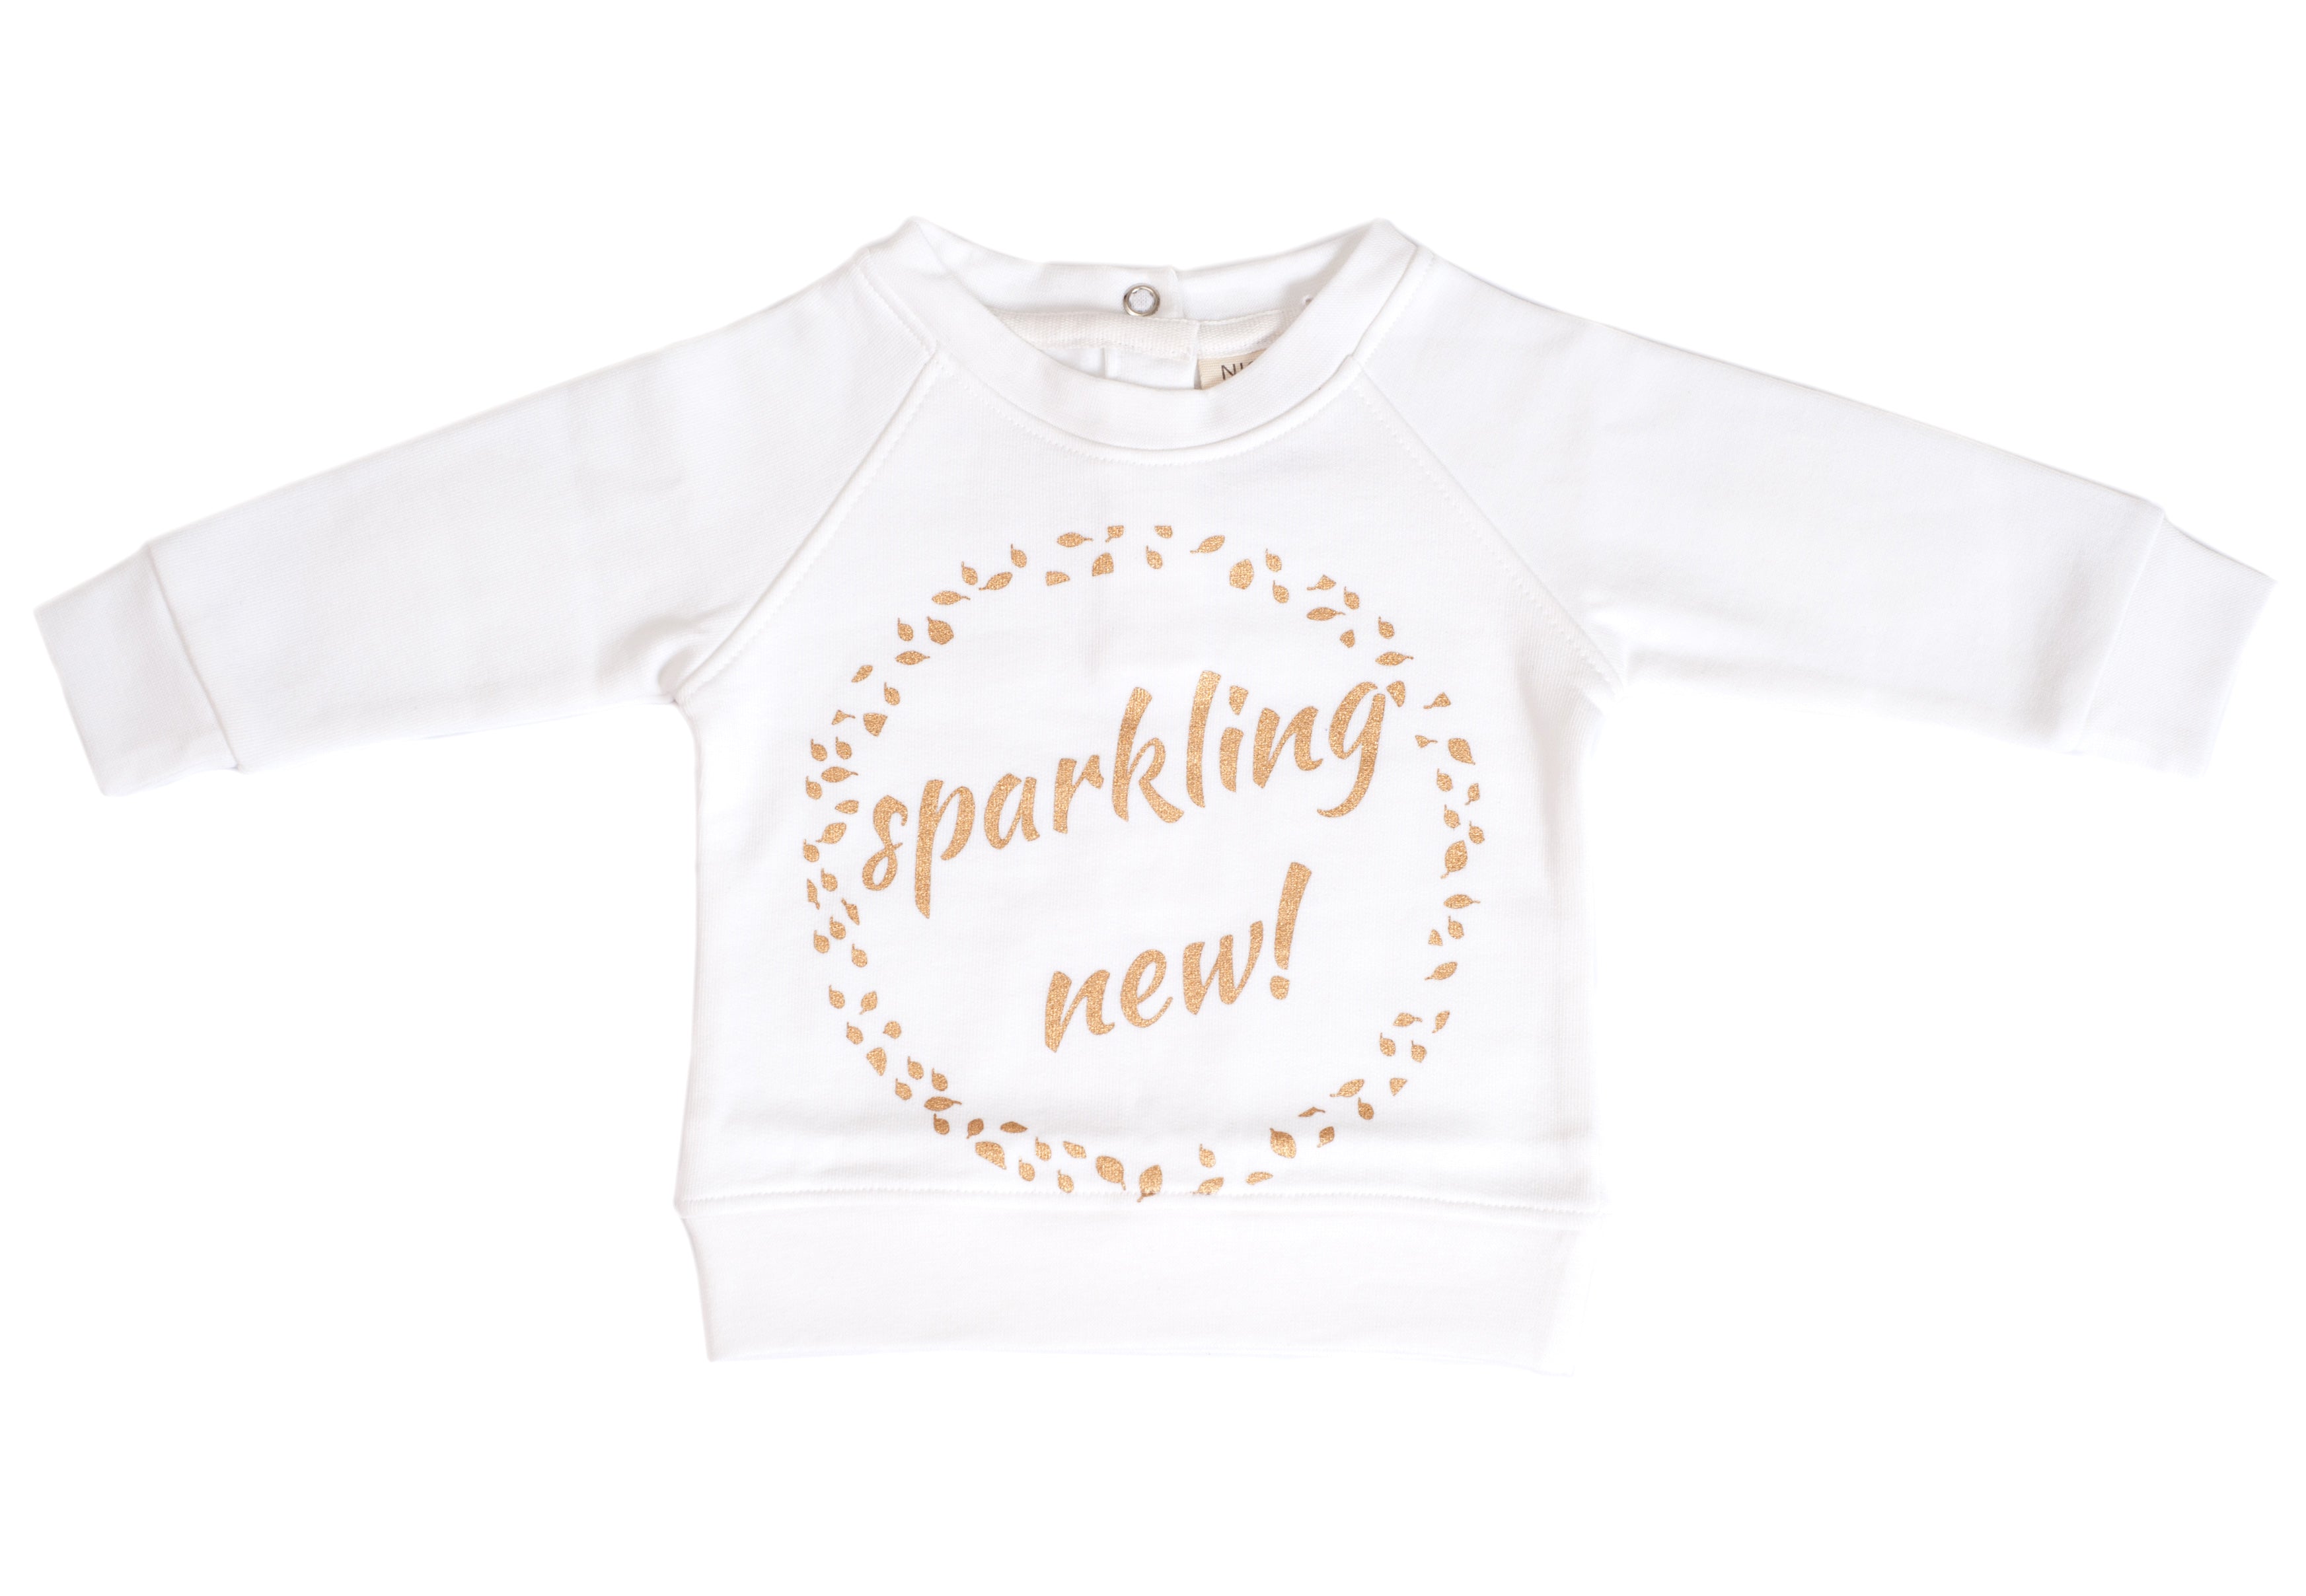 Organic Cotton Baby Sweatshirt - SPARKLING NEW GOLD